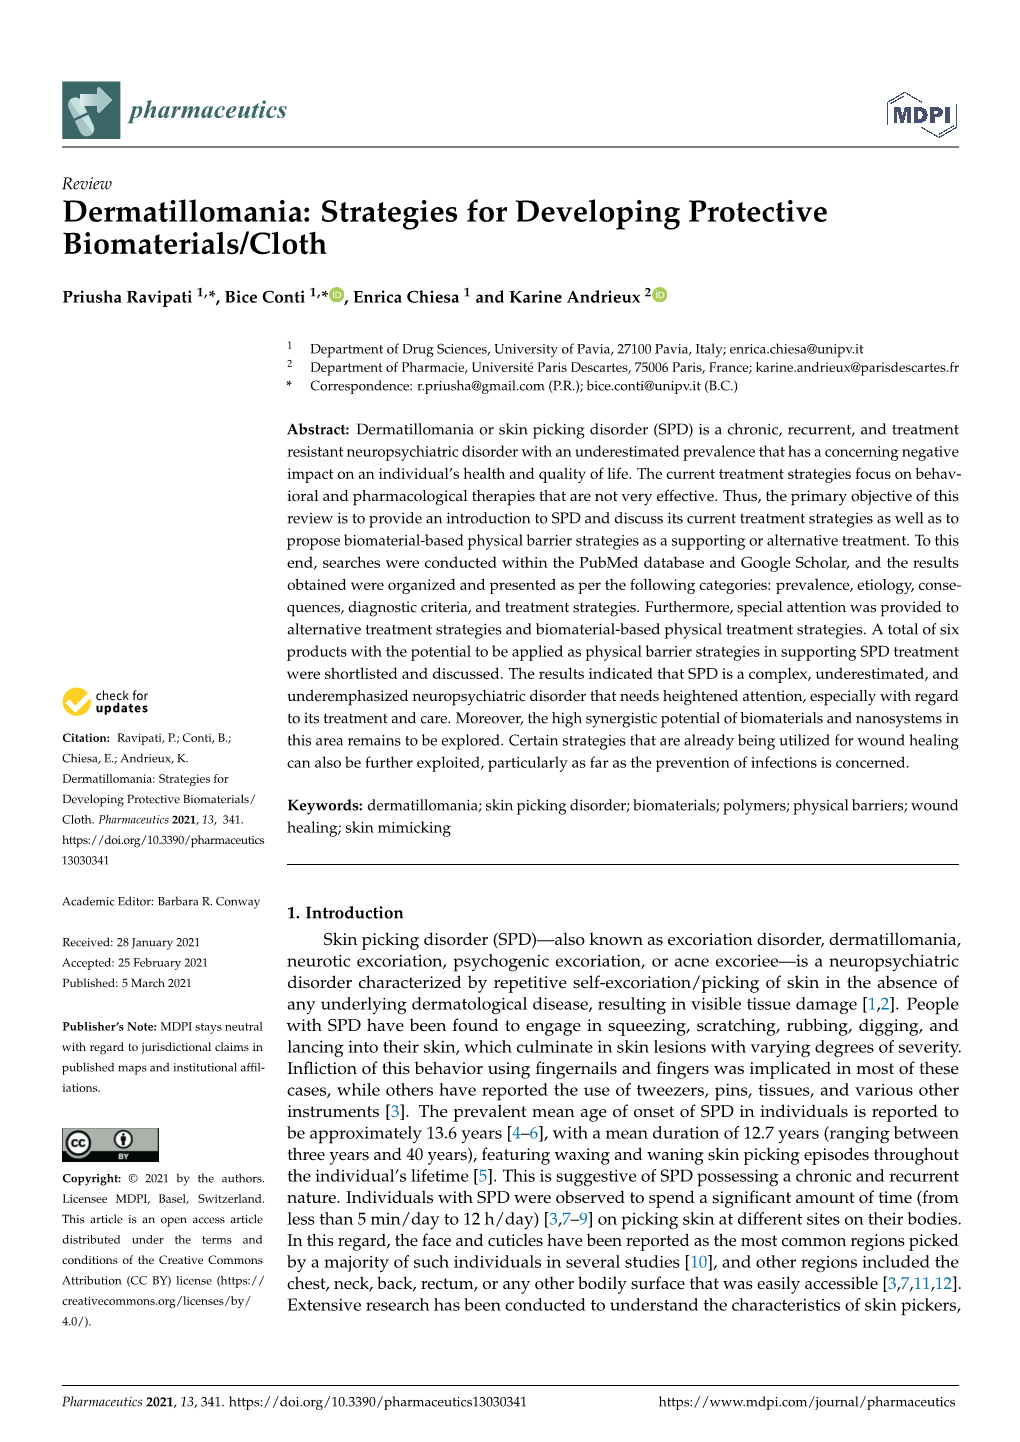 Dermatillomania: Strategies for Developing Protective Biomaterials/Cloth